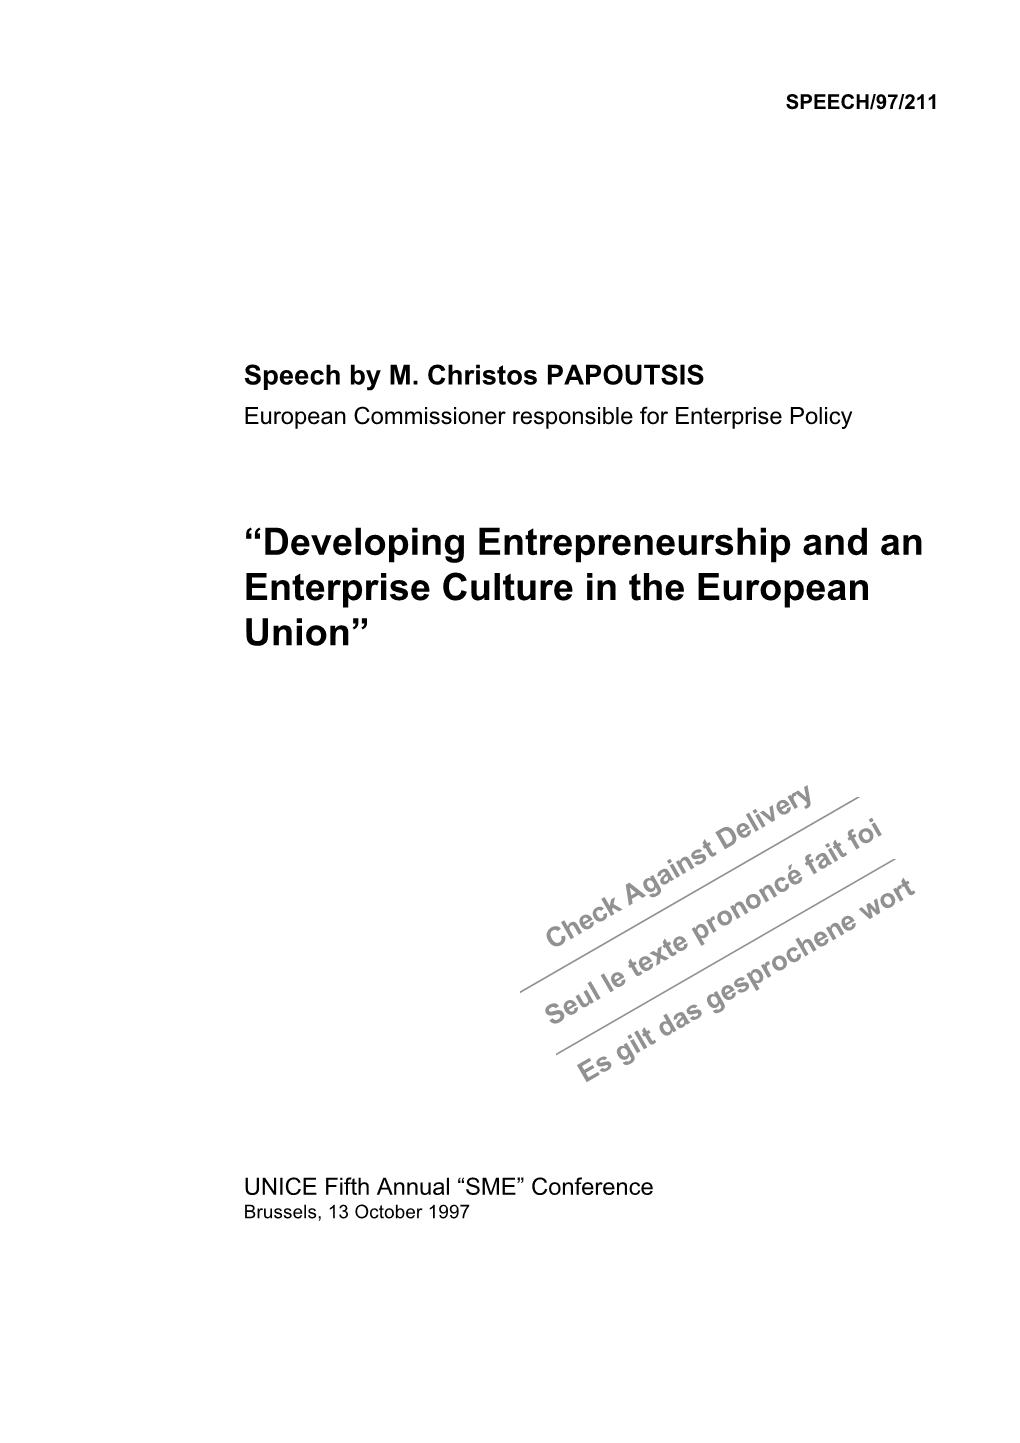 Developing Entrepreneurship and an Enterprise Culture in the European Union”